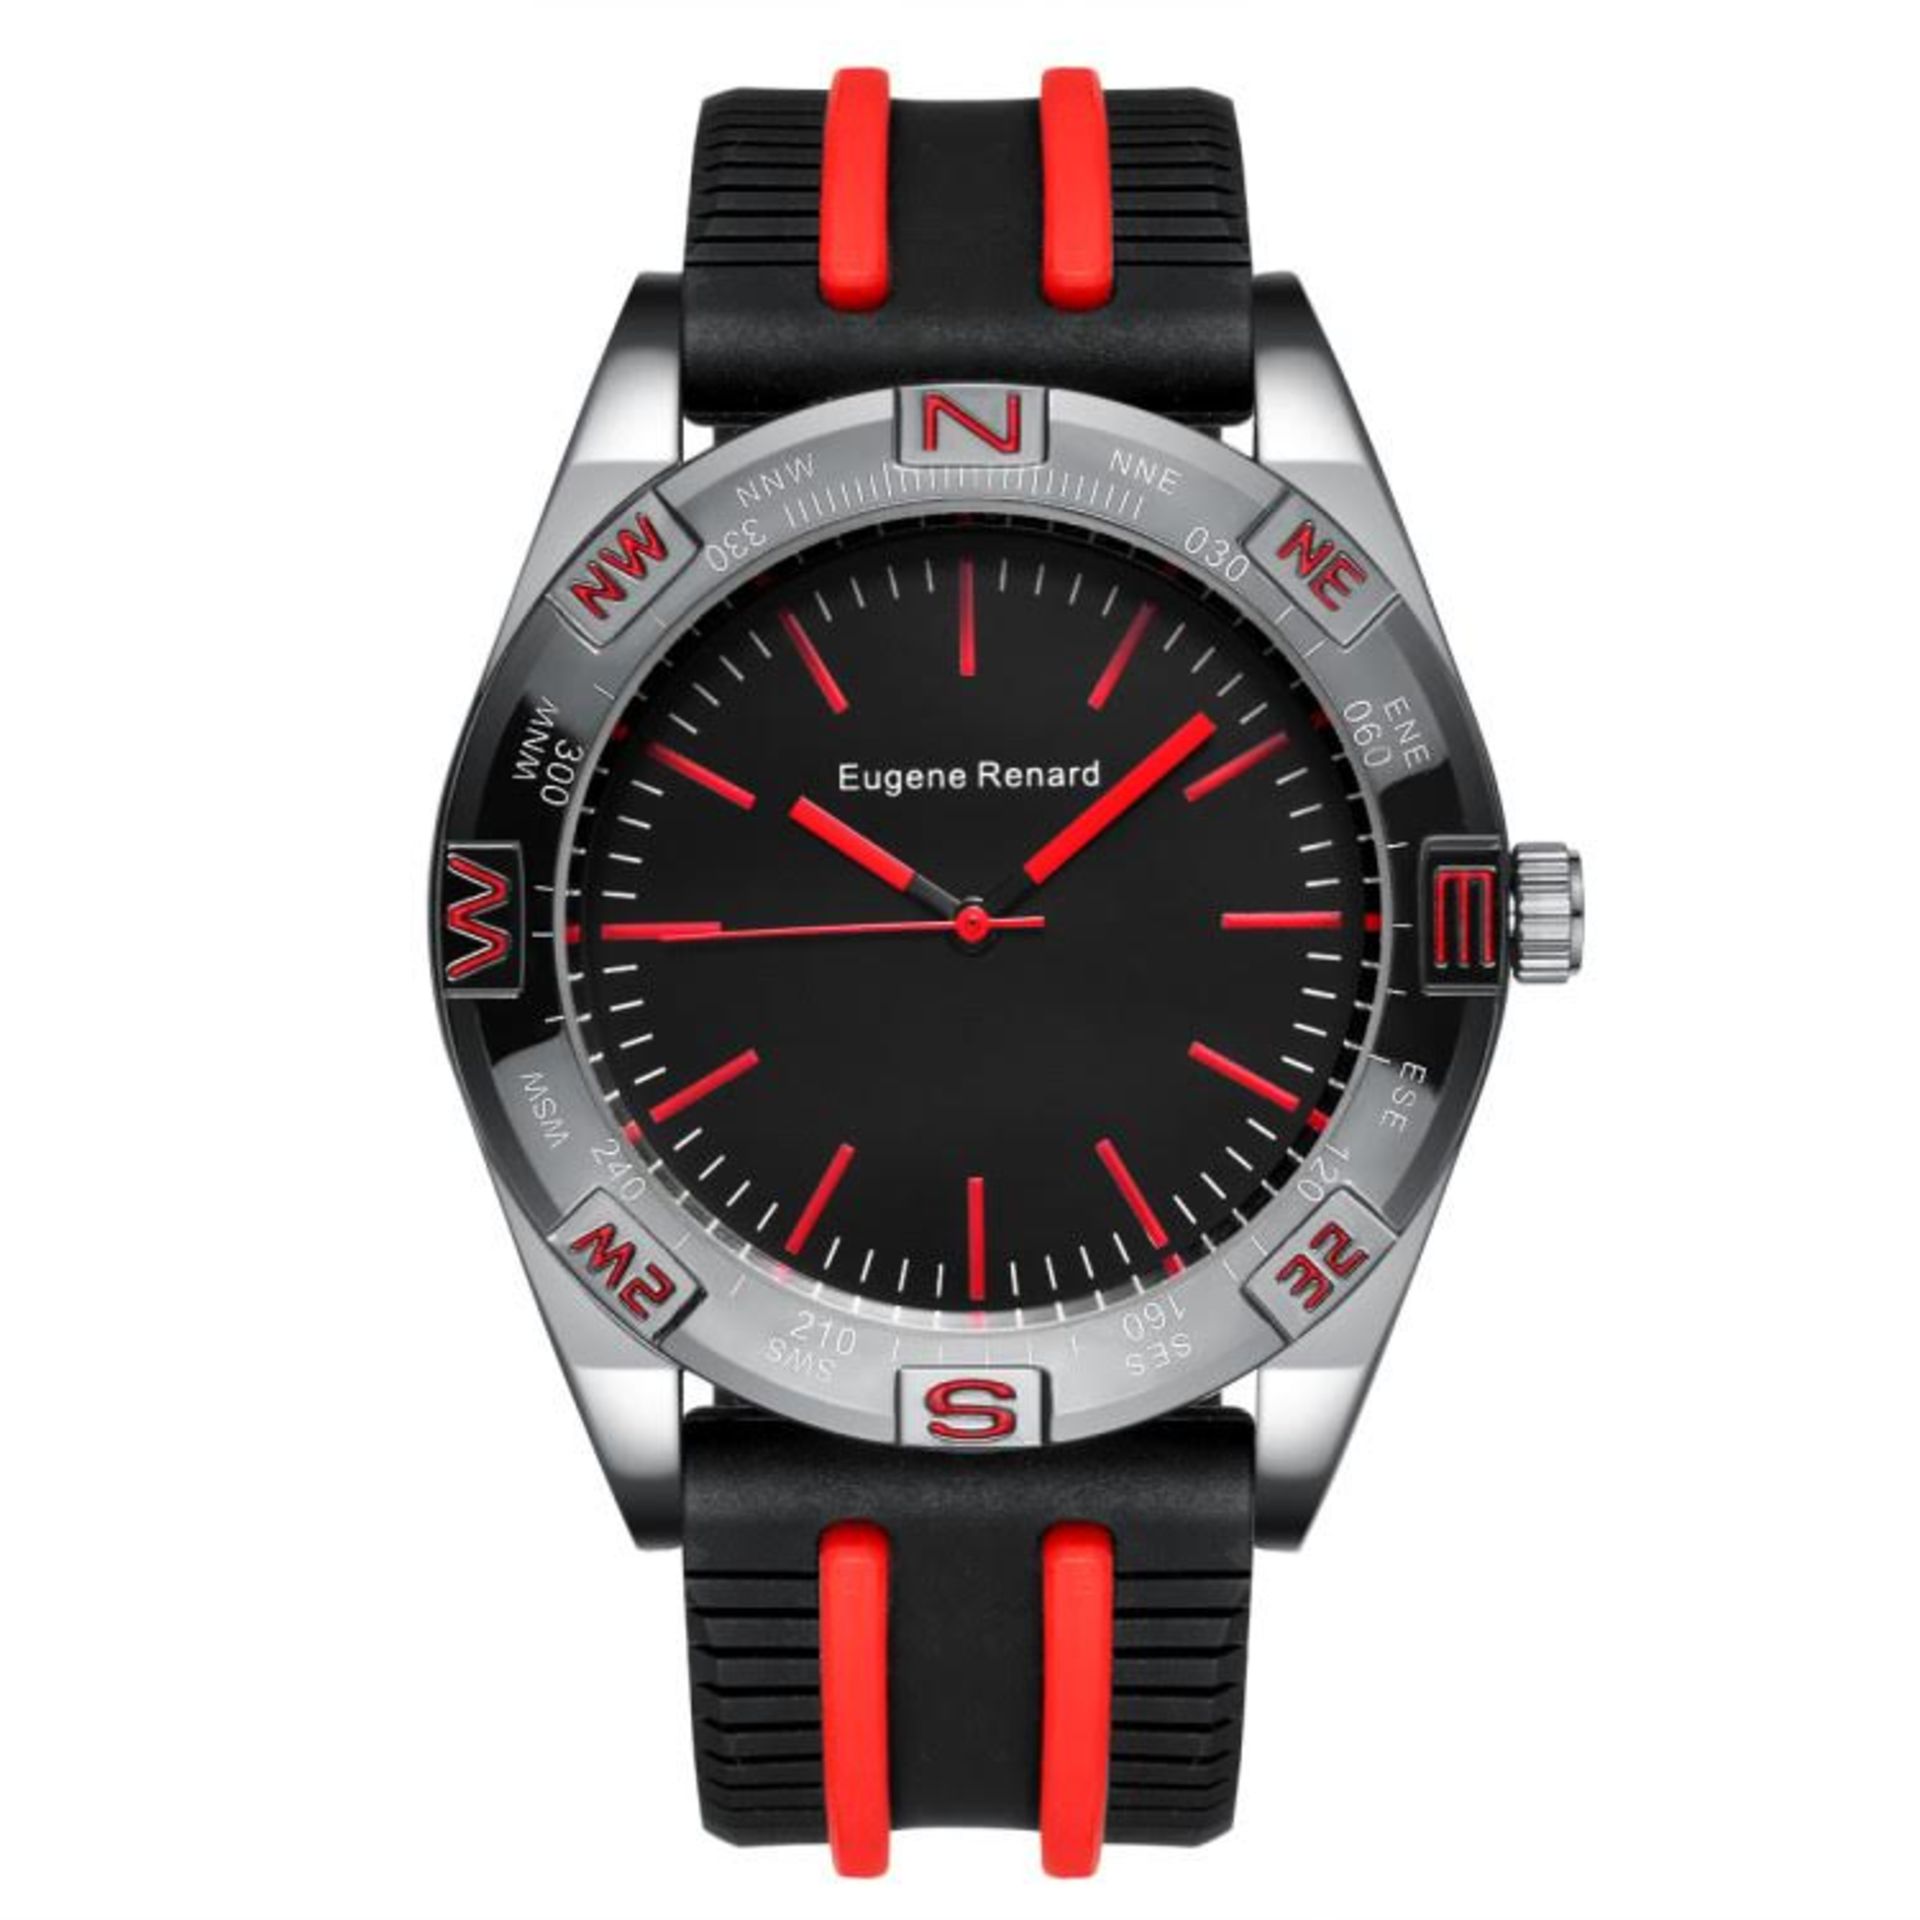 V *TRADE QTY* Brand New Gents Eugene Renard Timepiece Model X - Black Face - Red Indices - Red/Black - Image 2 of 2